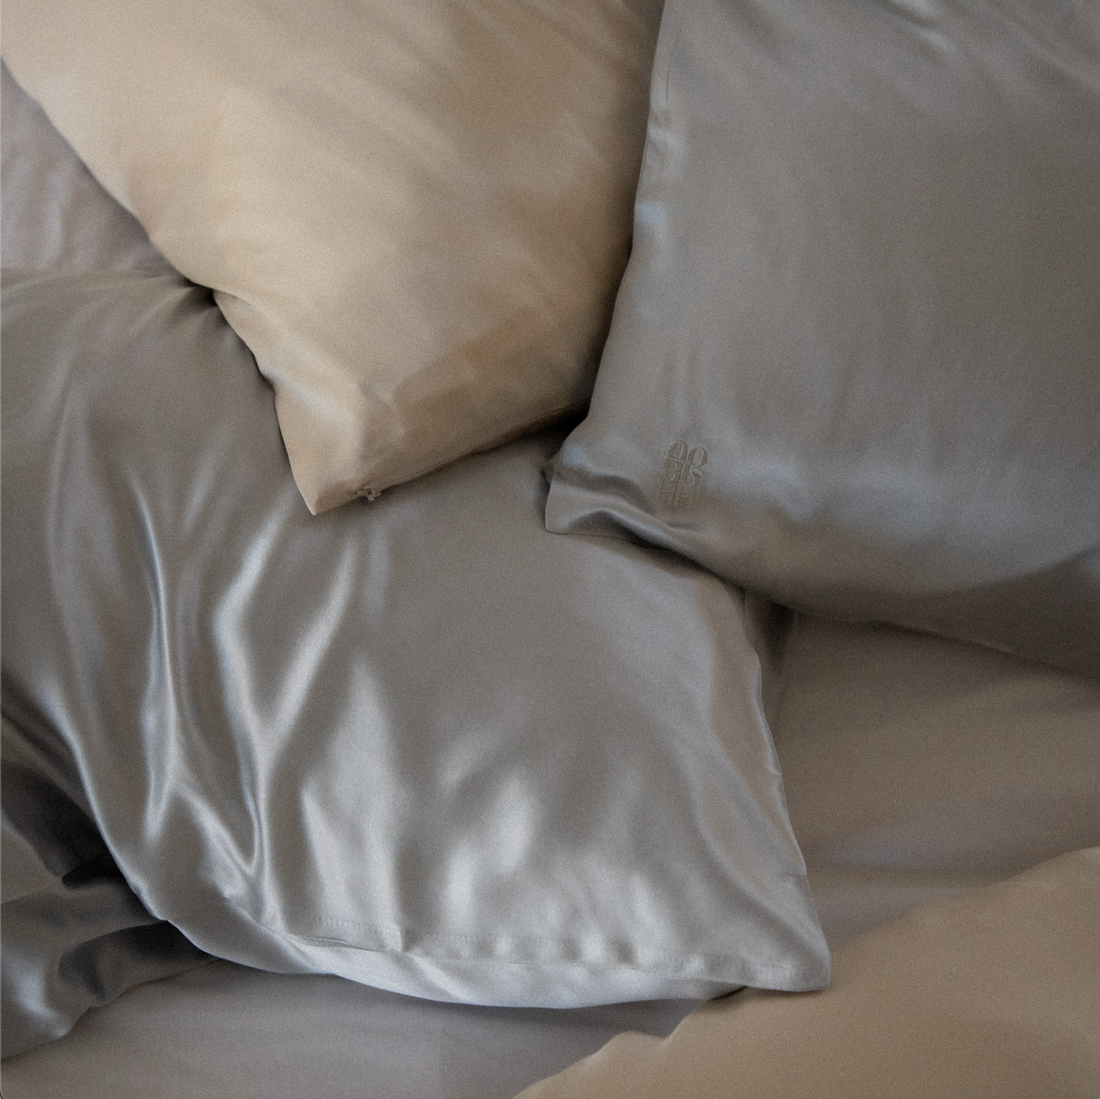 Does sleeping on a silk pillowcase actually help your hair?